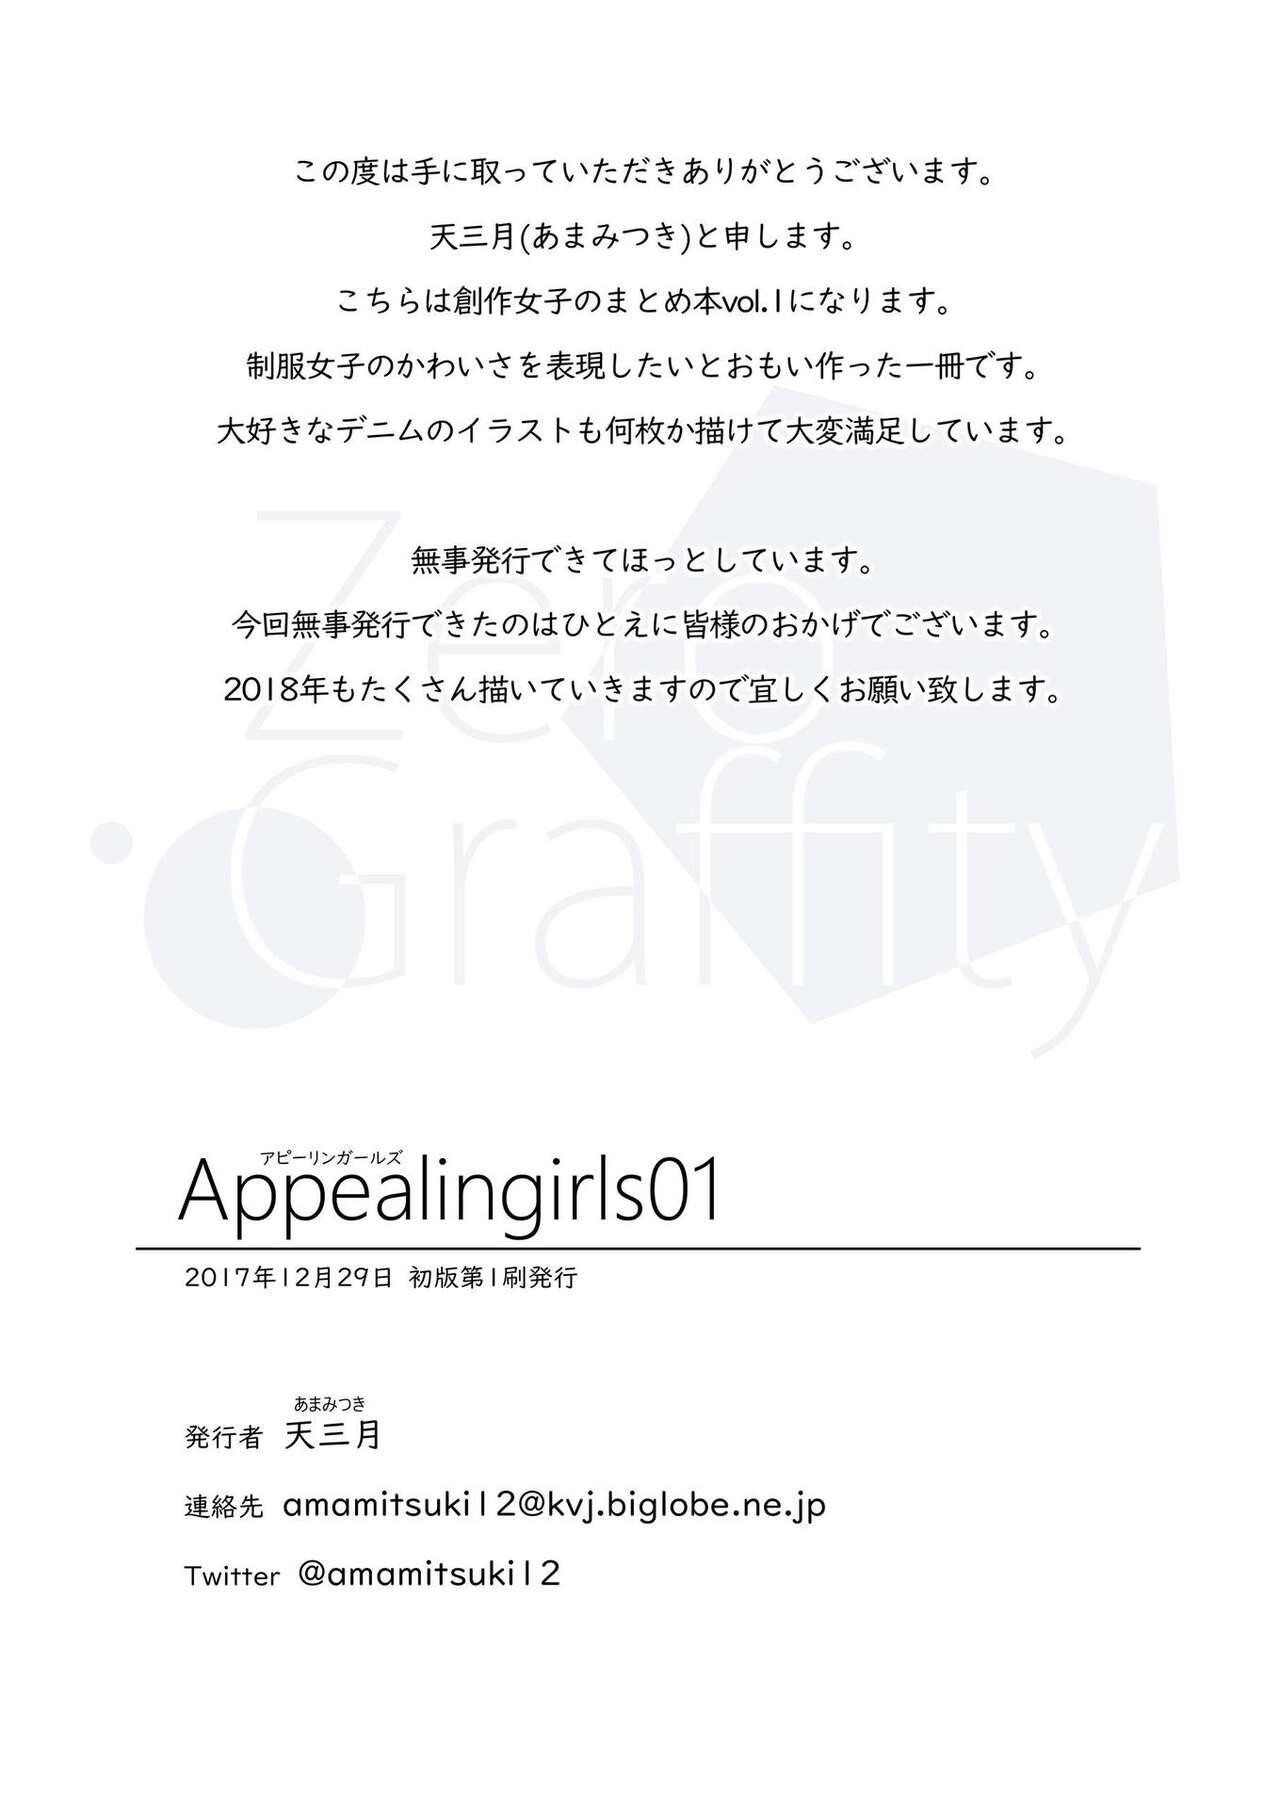 Appealingirls01 53